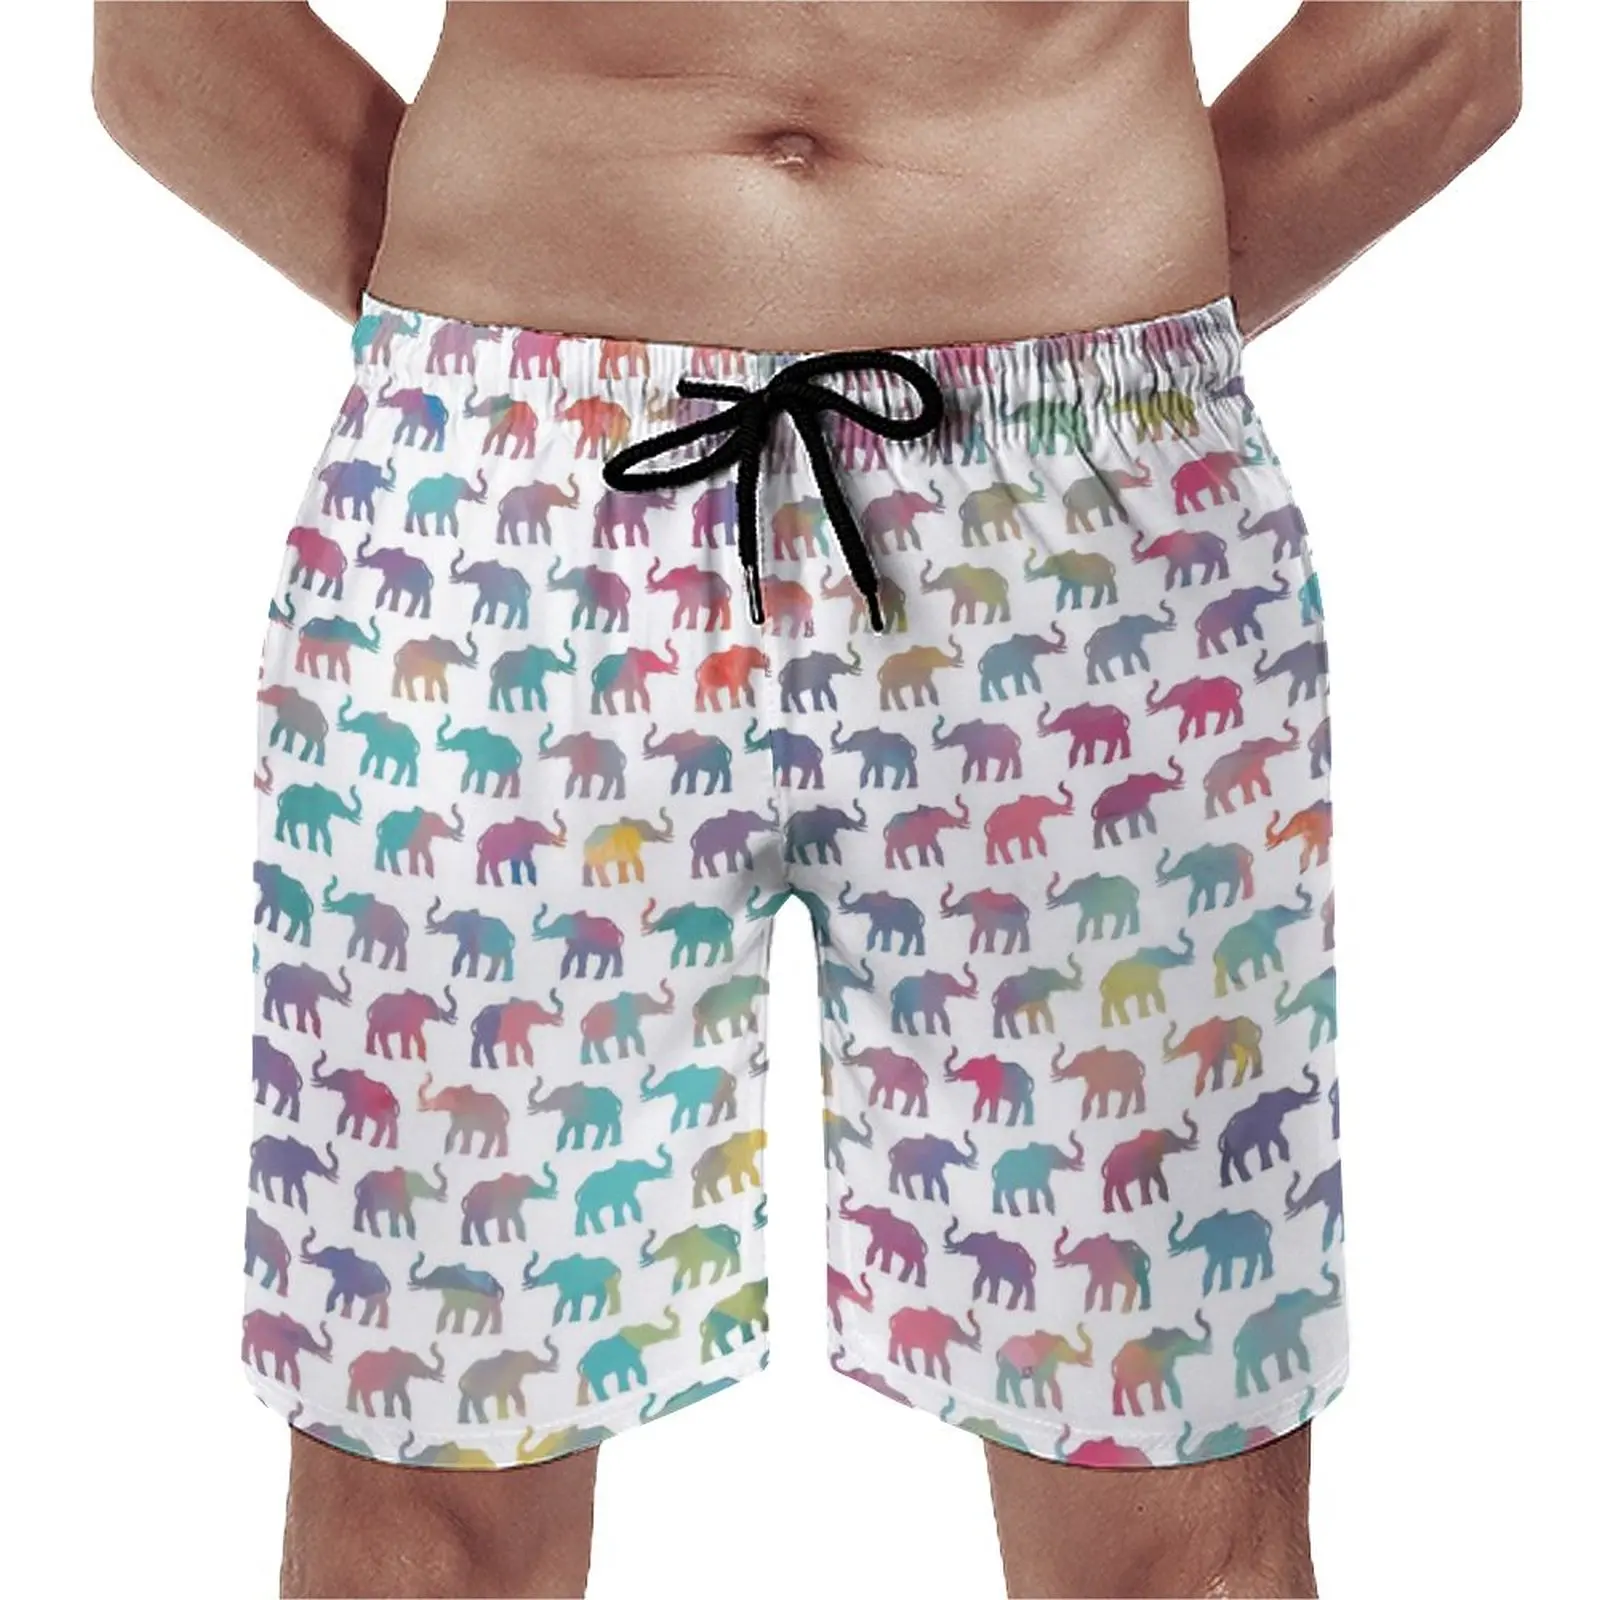 

Colorful Elephant Board Shorts Elephants on Parade in Watercolor Men Funny Board Short Pants Hot Design Plus Size Swim Trunks